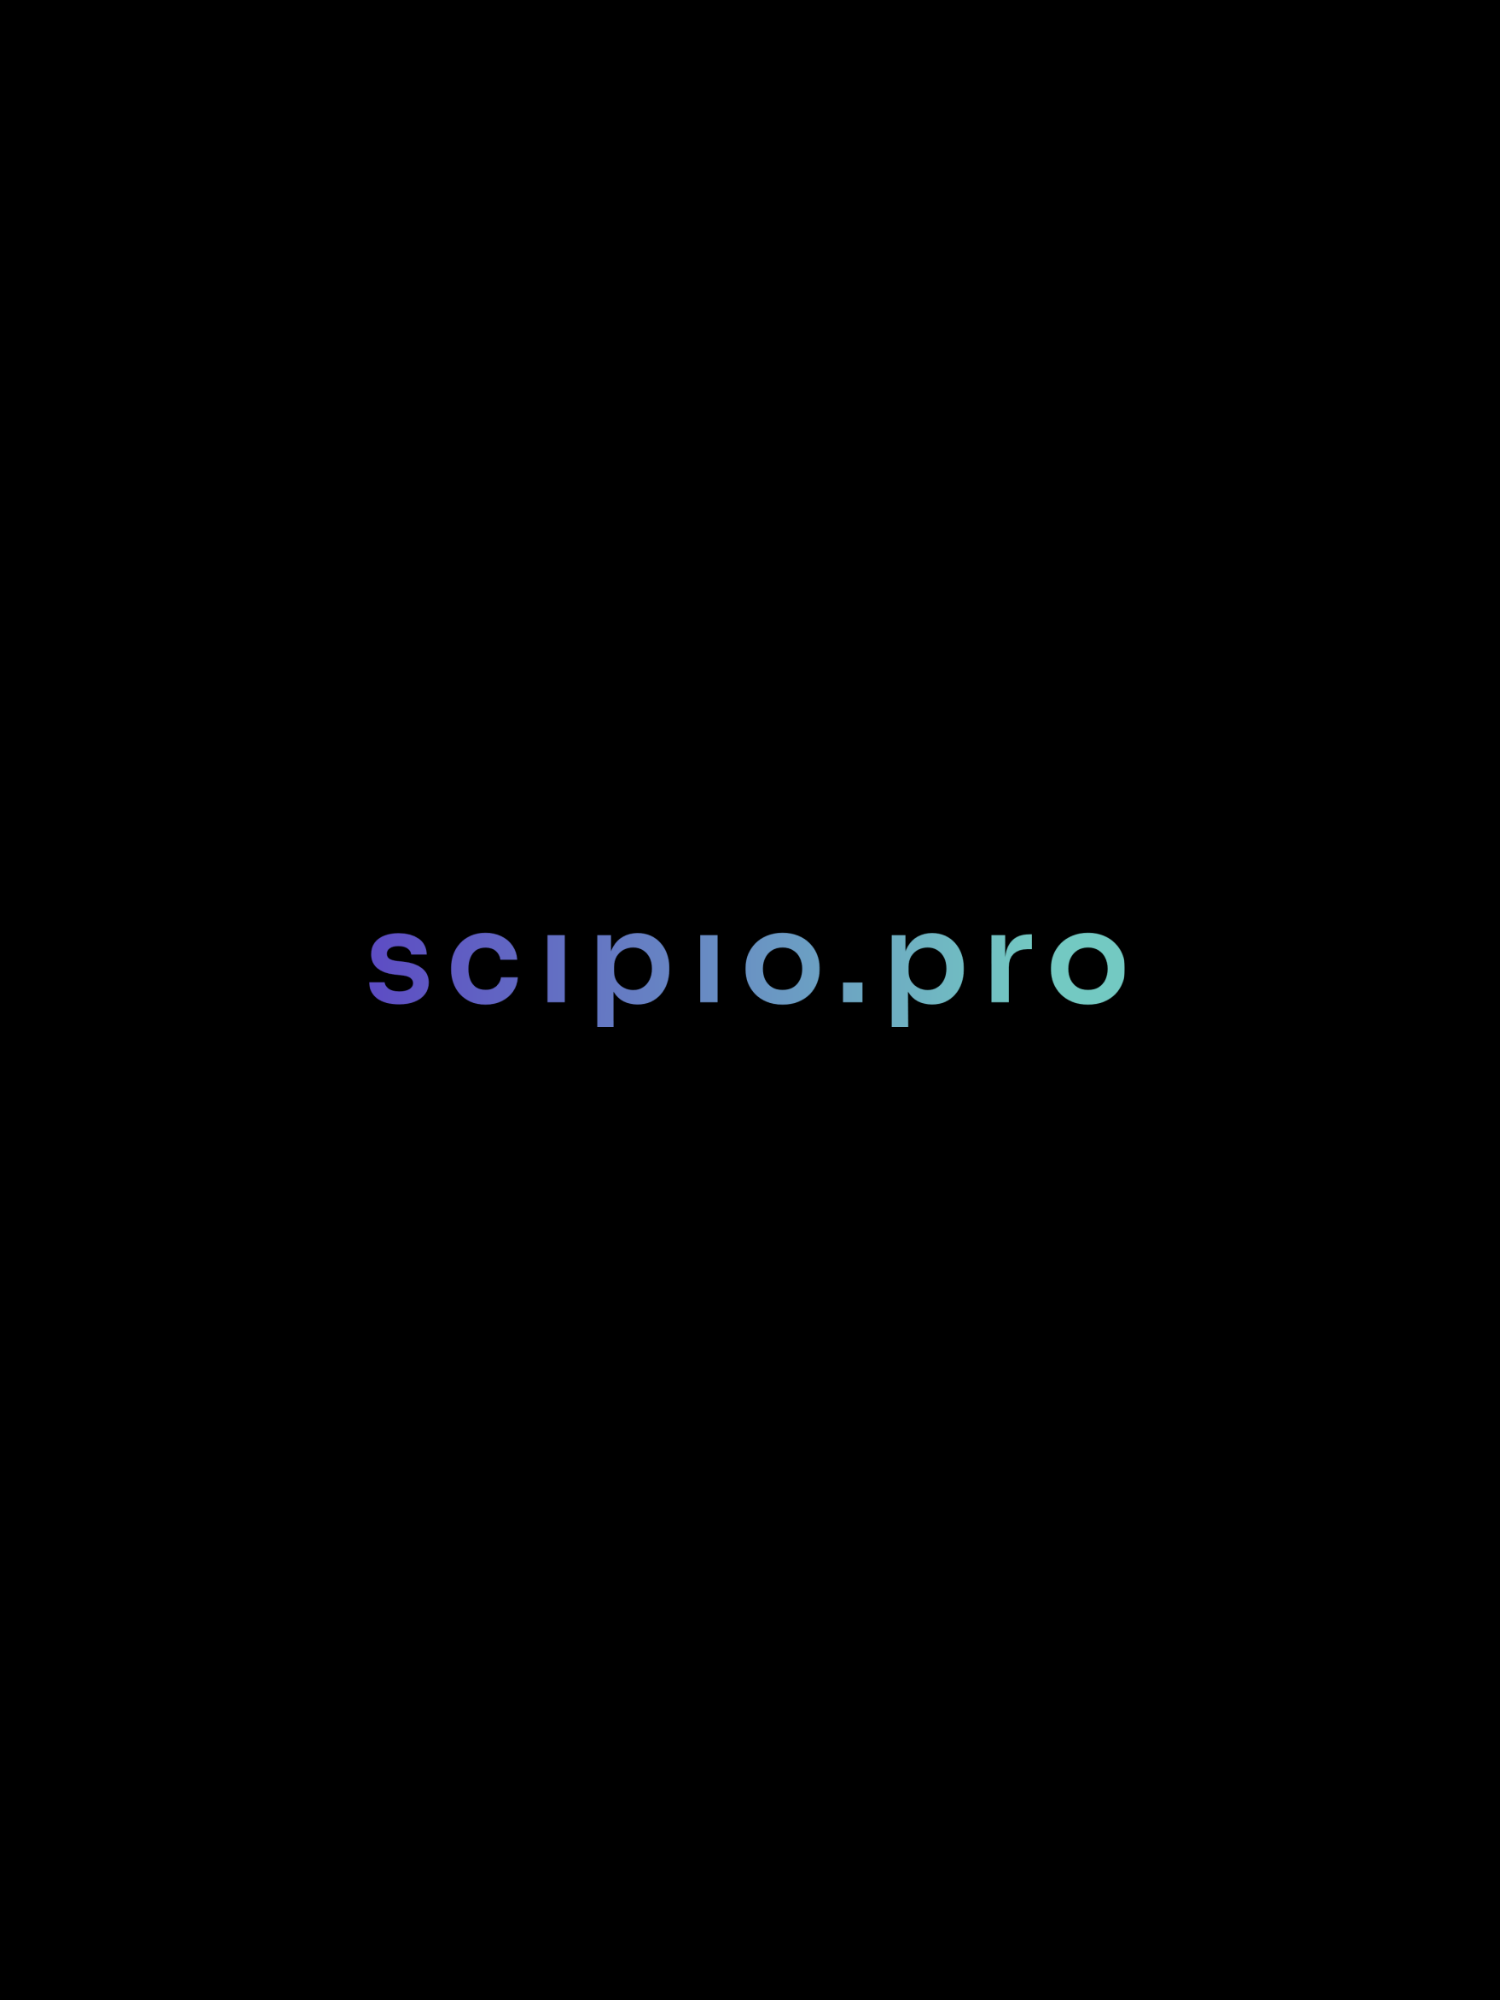 The Scipio Pro Suite: What's behind the indicators?